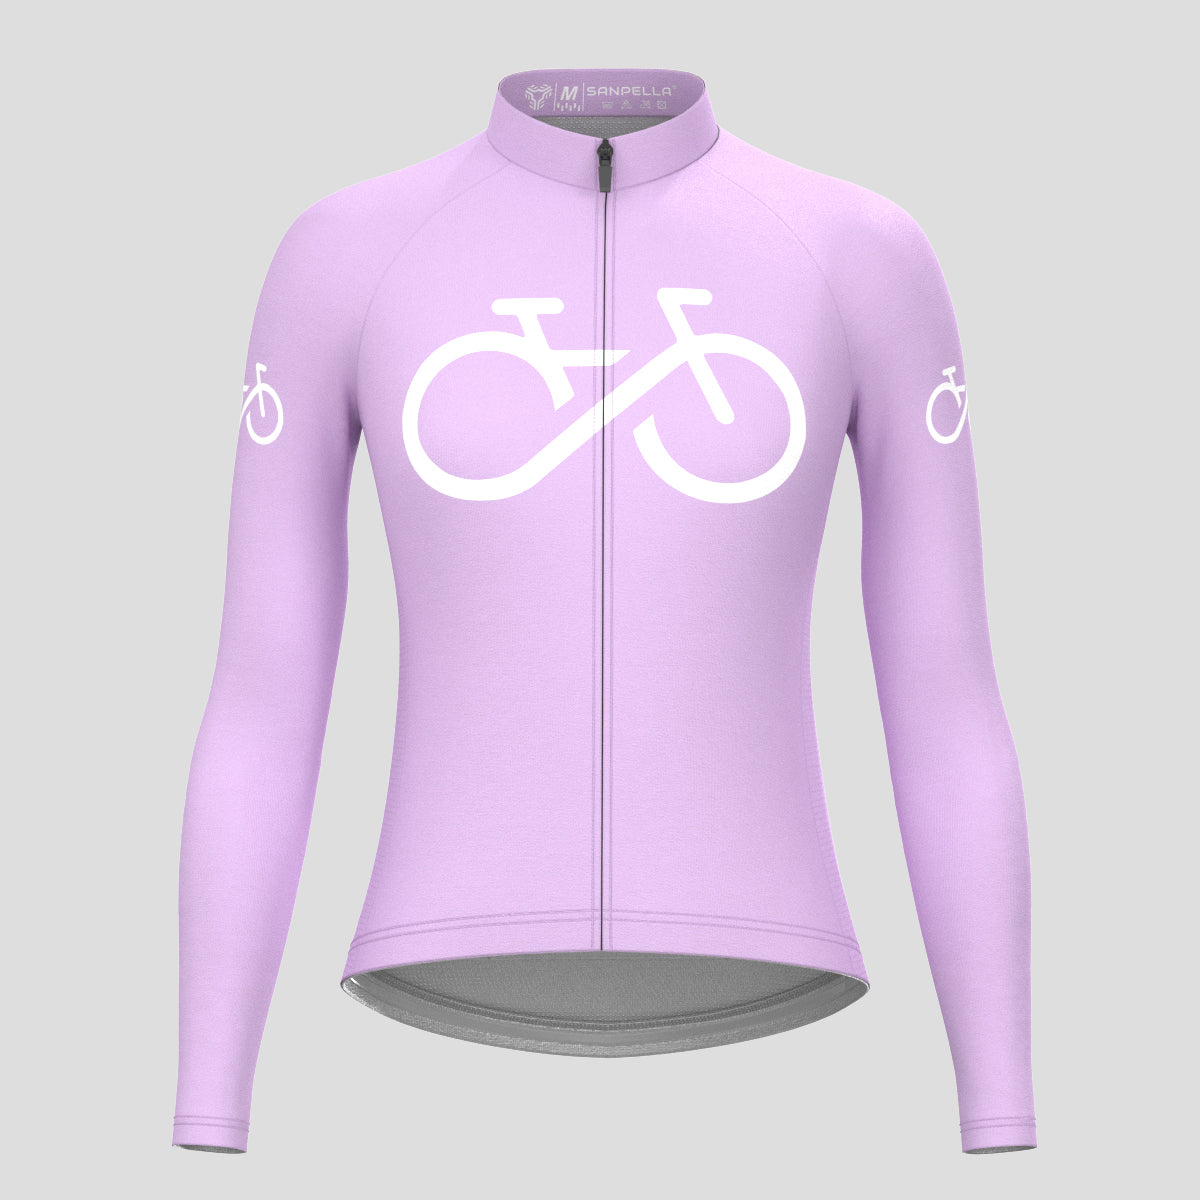 Bike Forever Women's LS Cycling Jersey - Haze